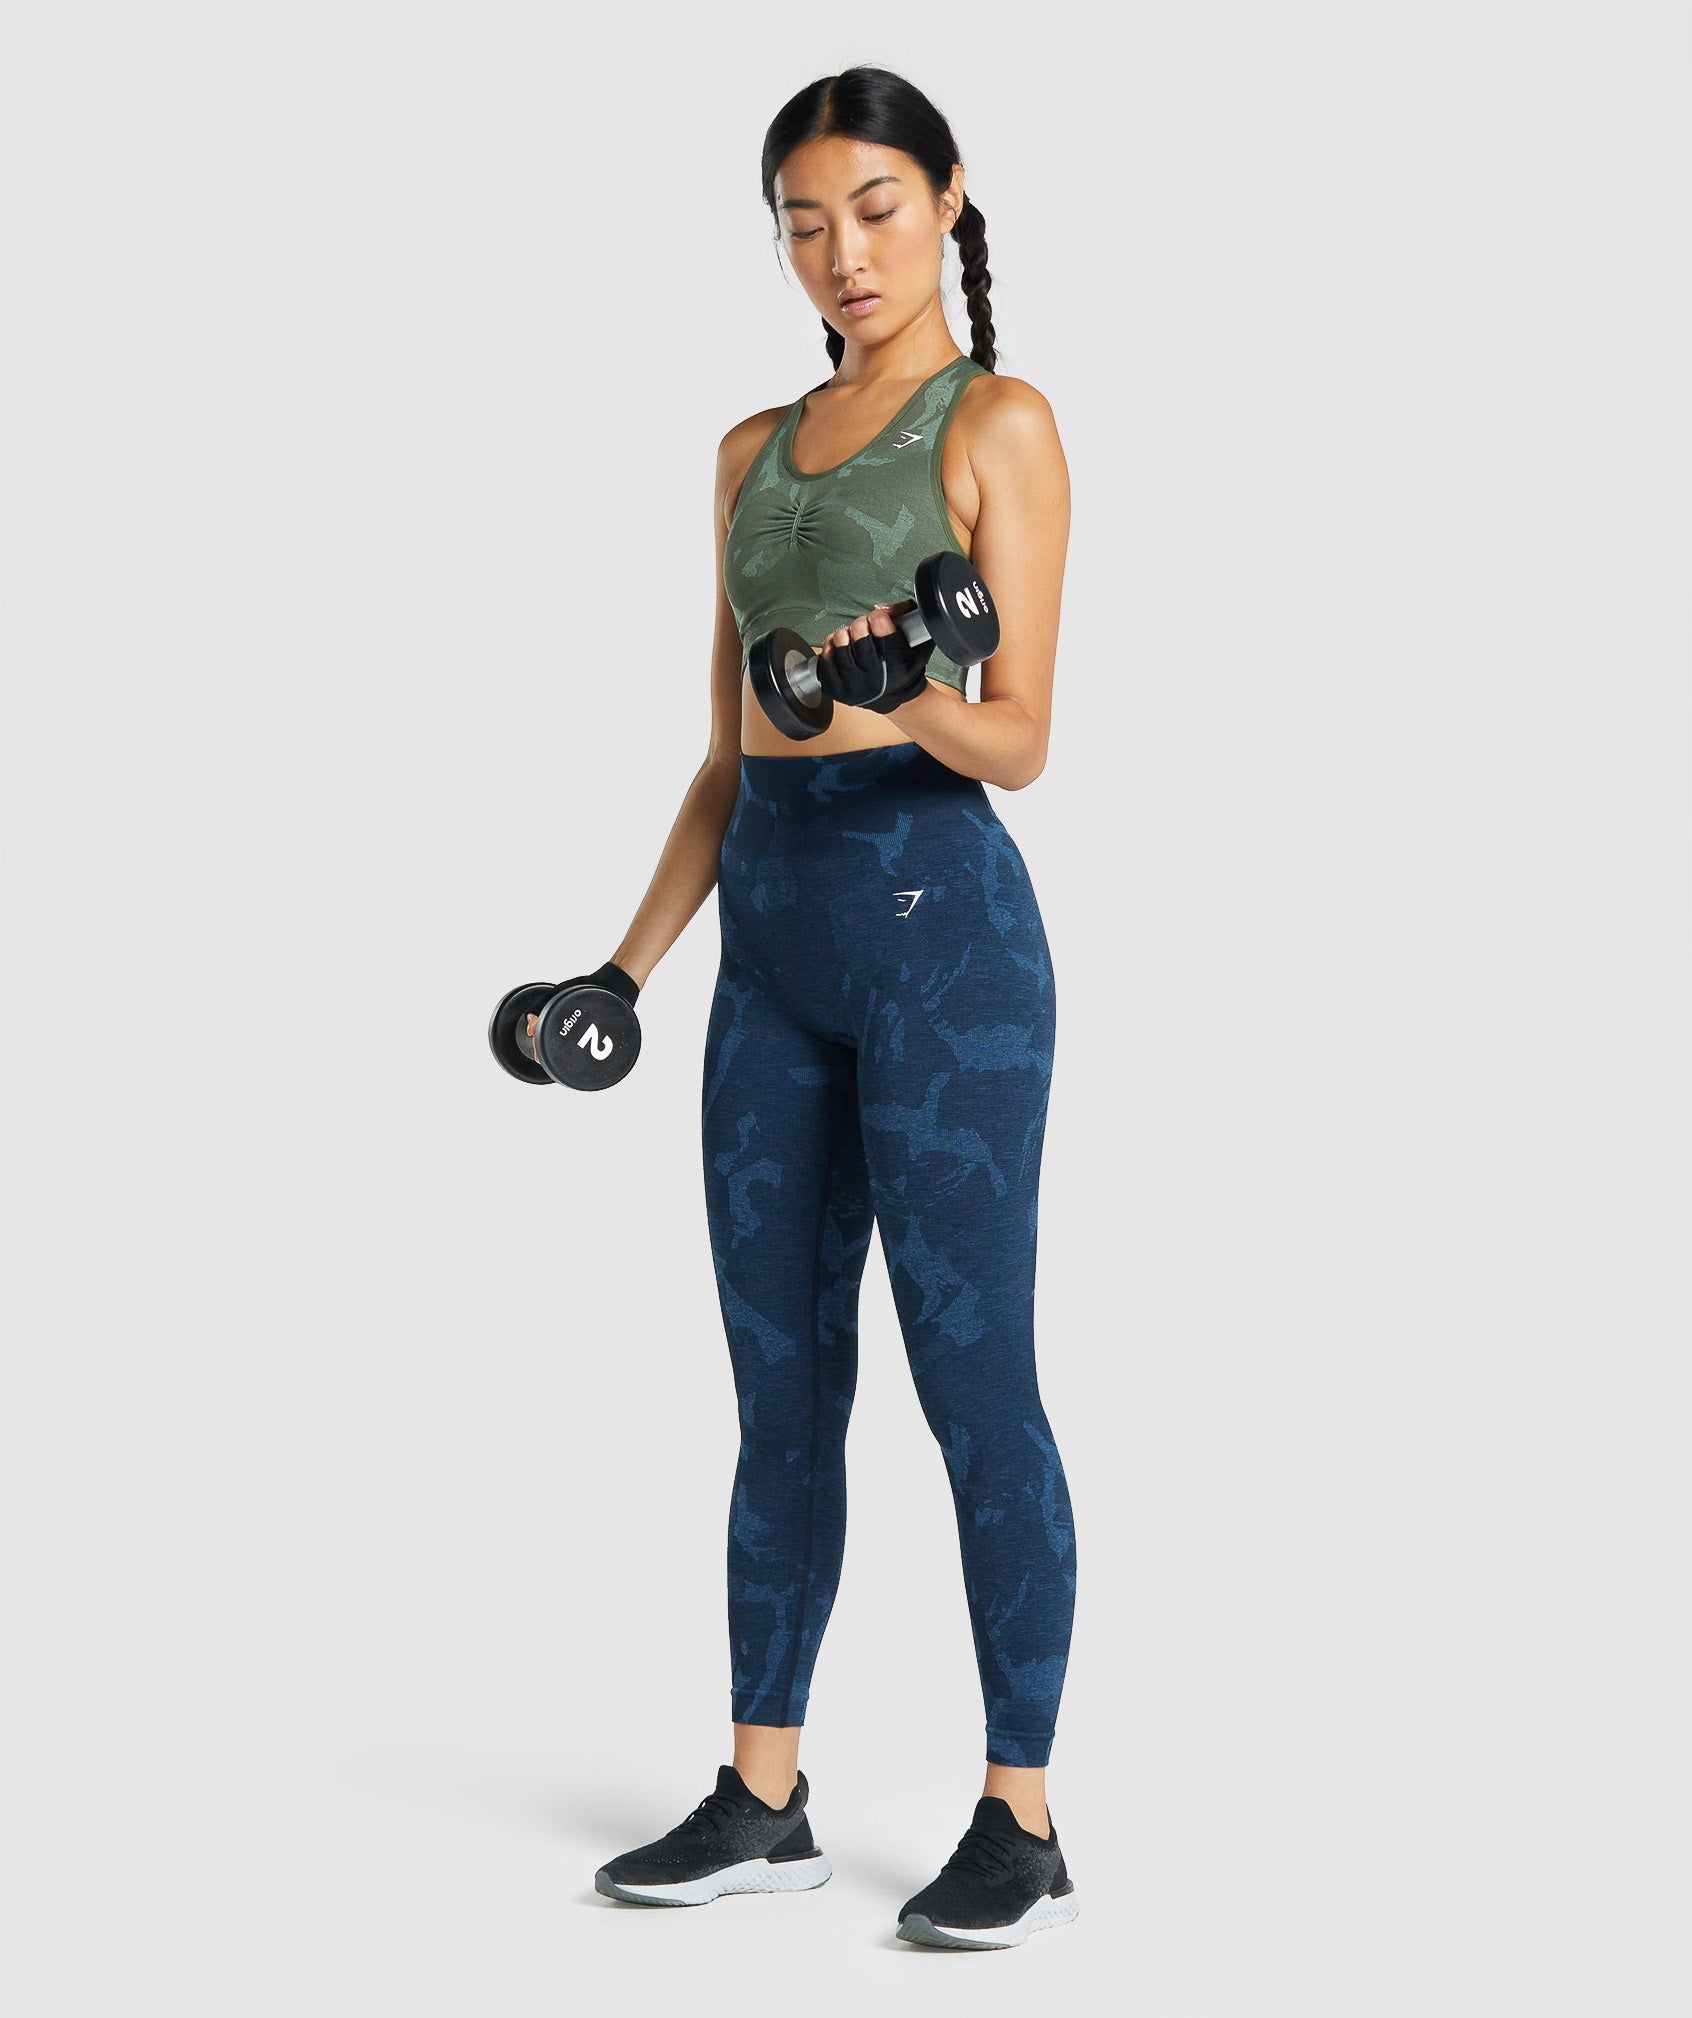 Gymshark adapt Camo Seamless bra Size Medium Green - $20 (60% Off Retail) -  From Stephanie